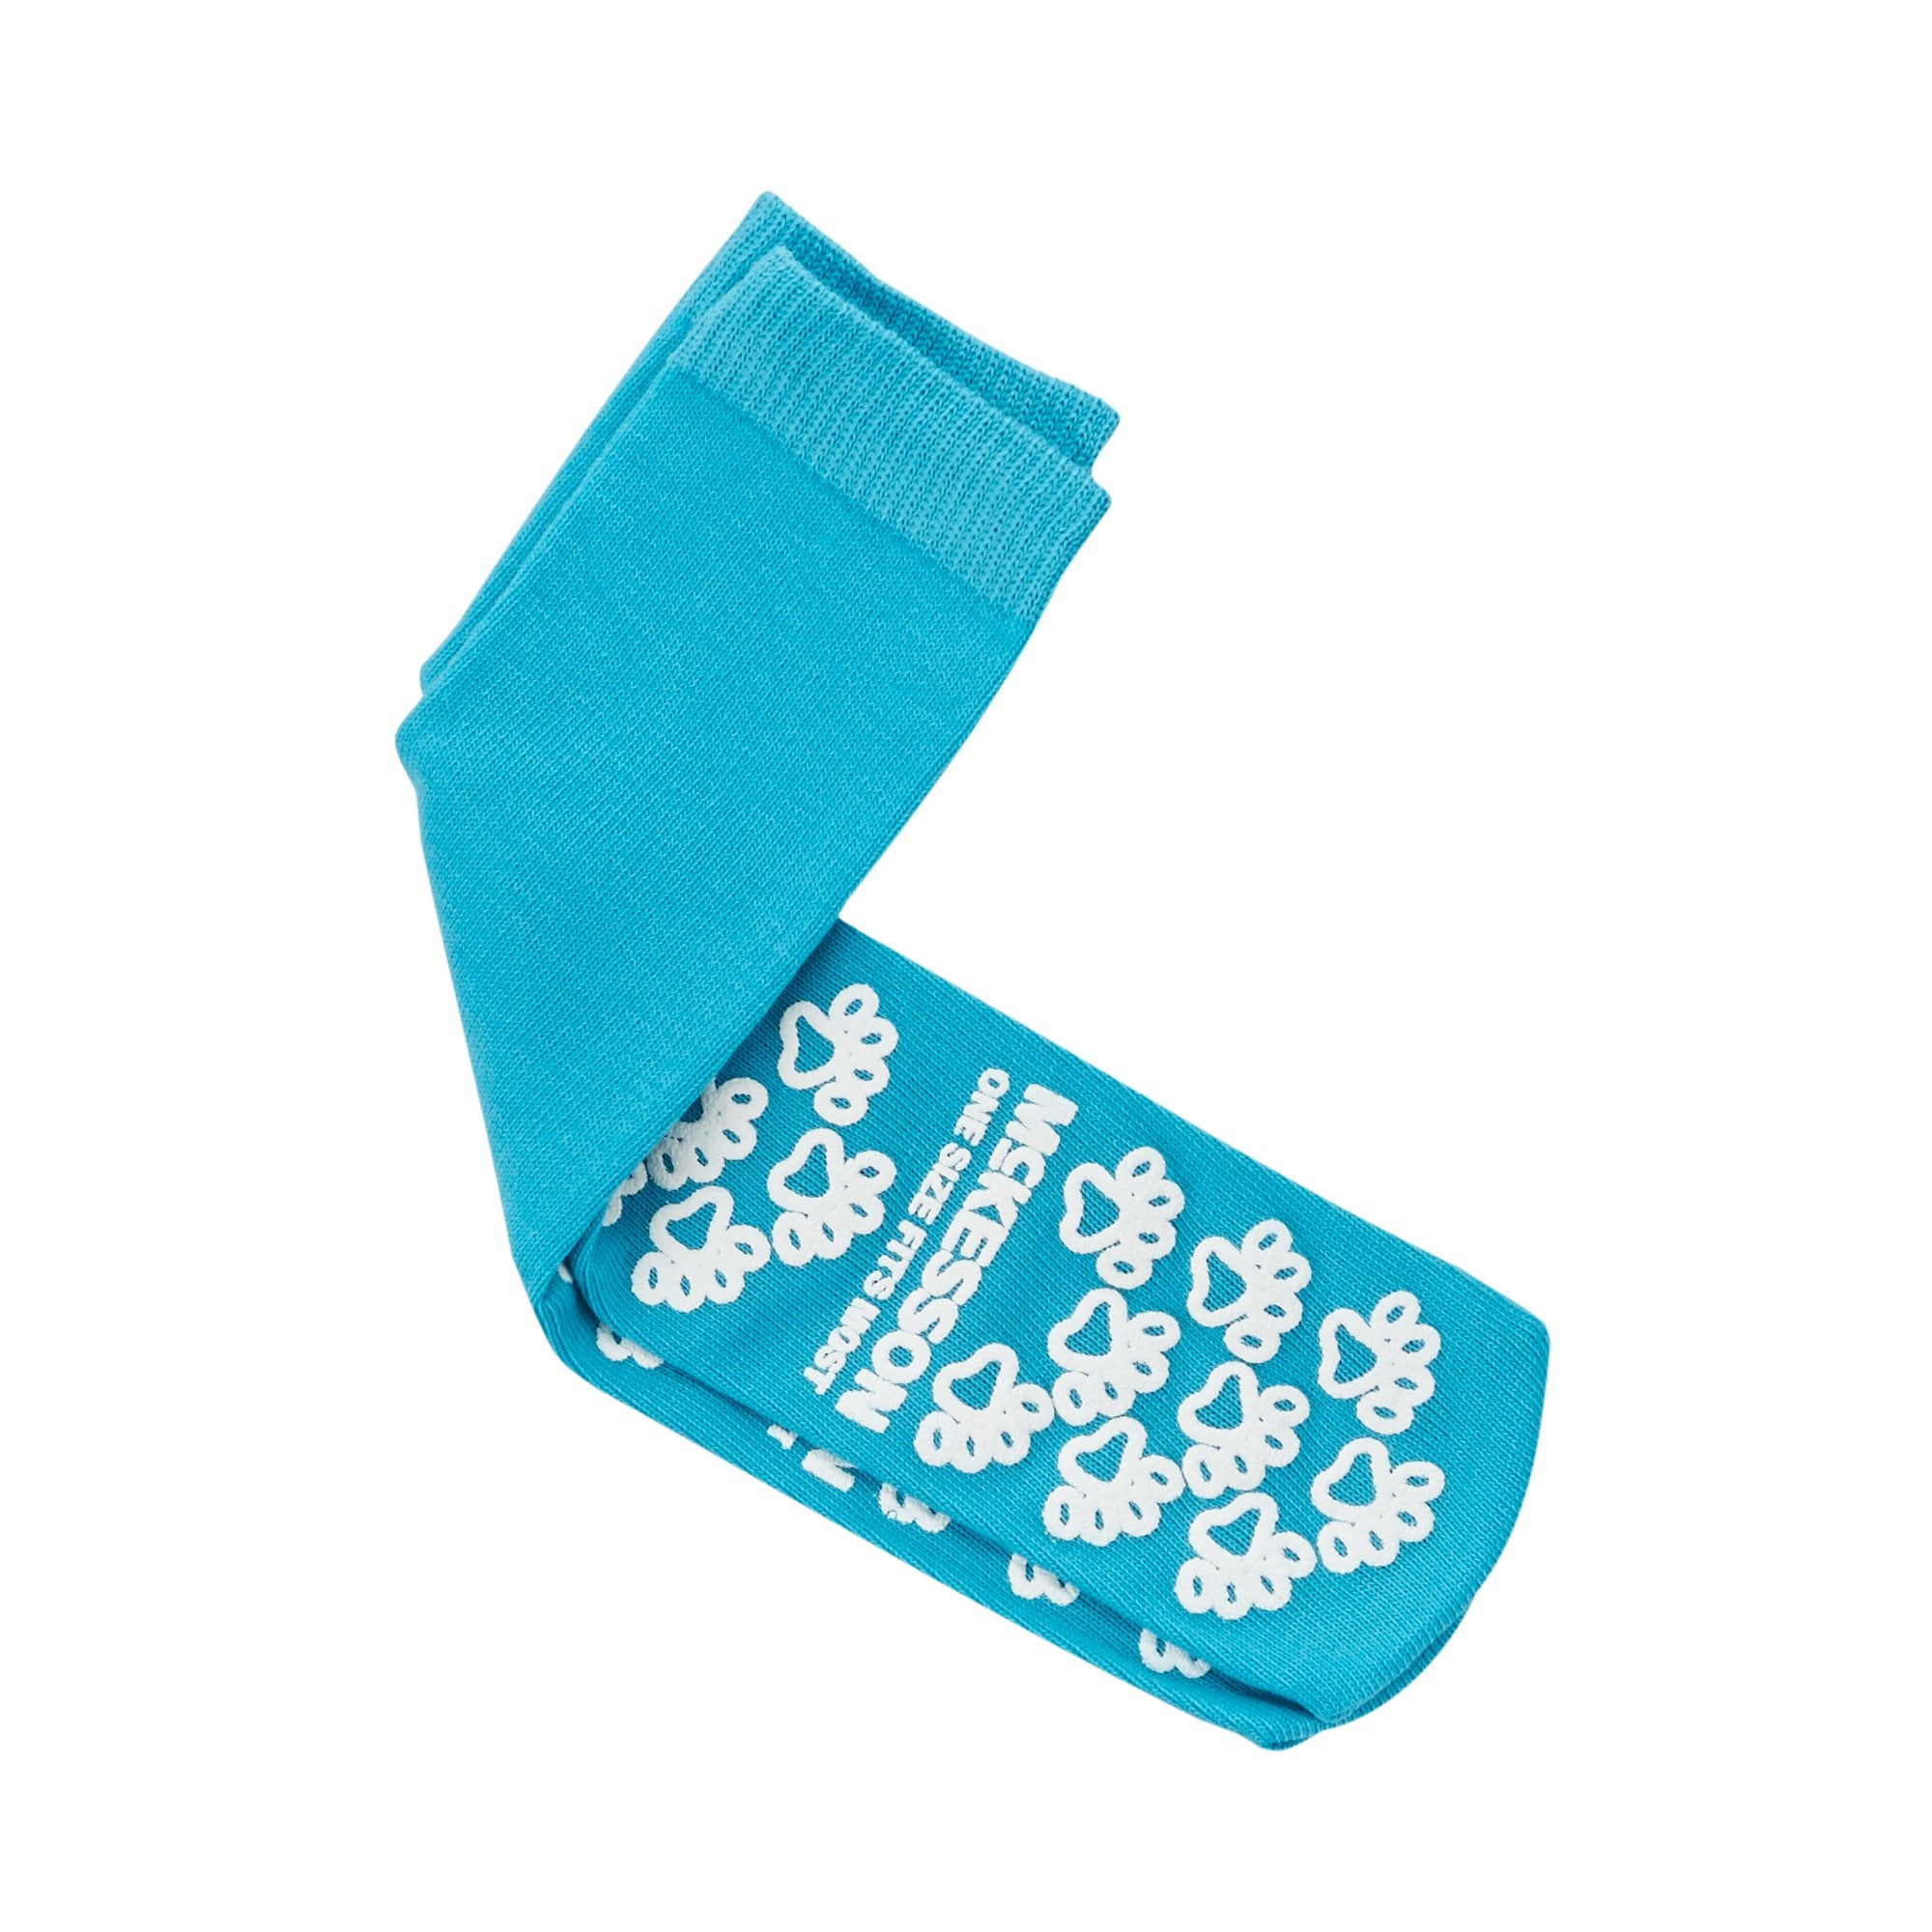 McKesson Paw Prints Slipper Socks, Aqua -Case of 96